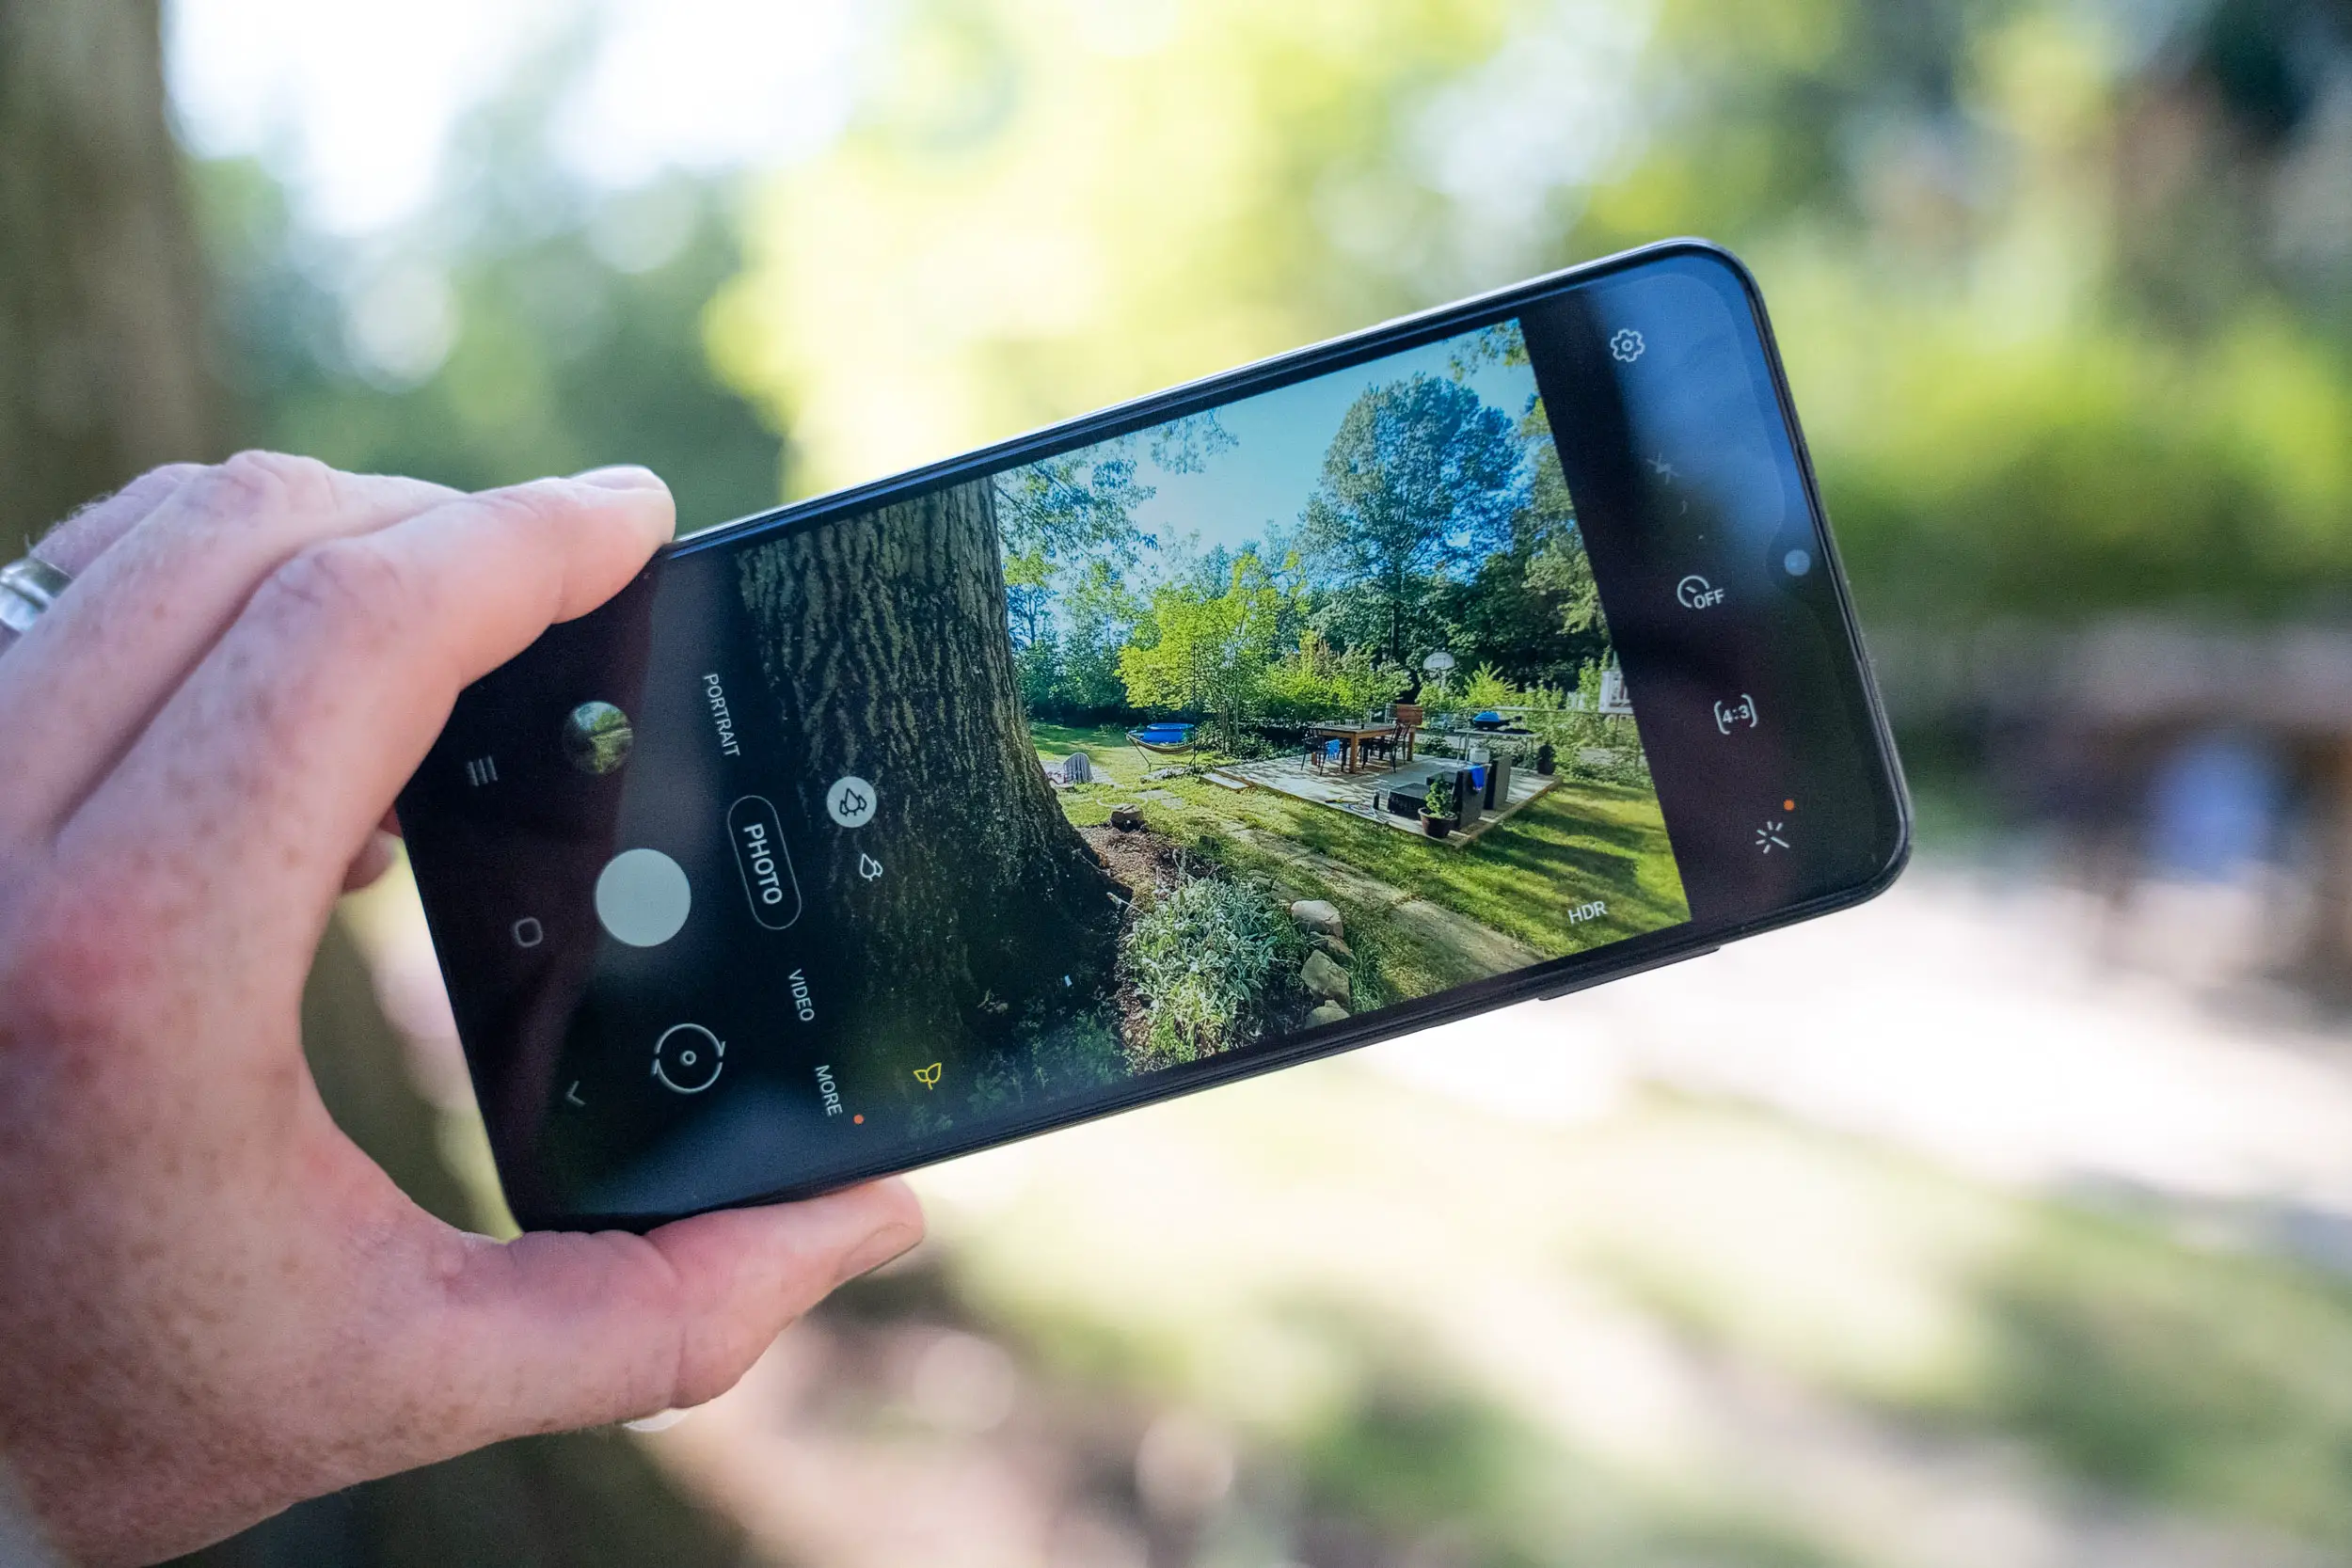 Samsung Galaxy A32 5G review: Camera, image quality